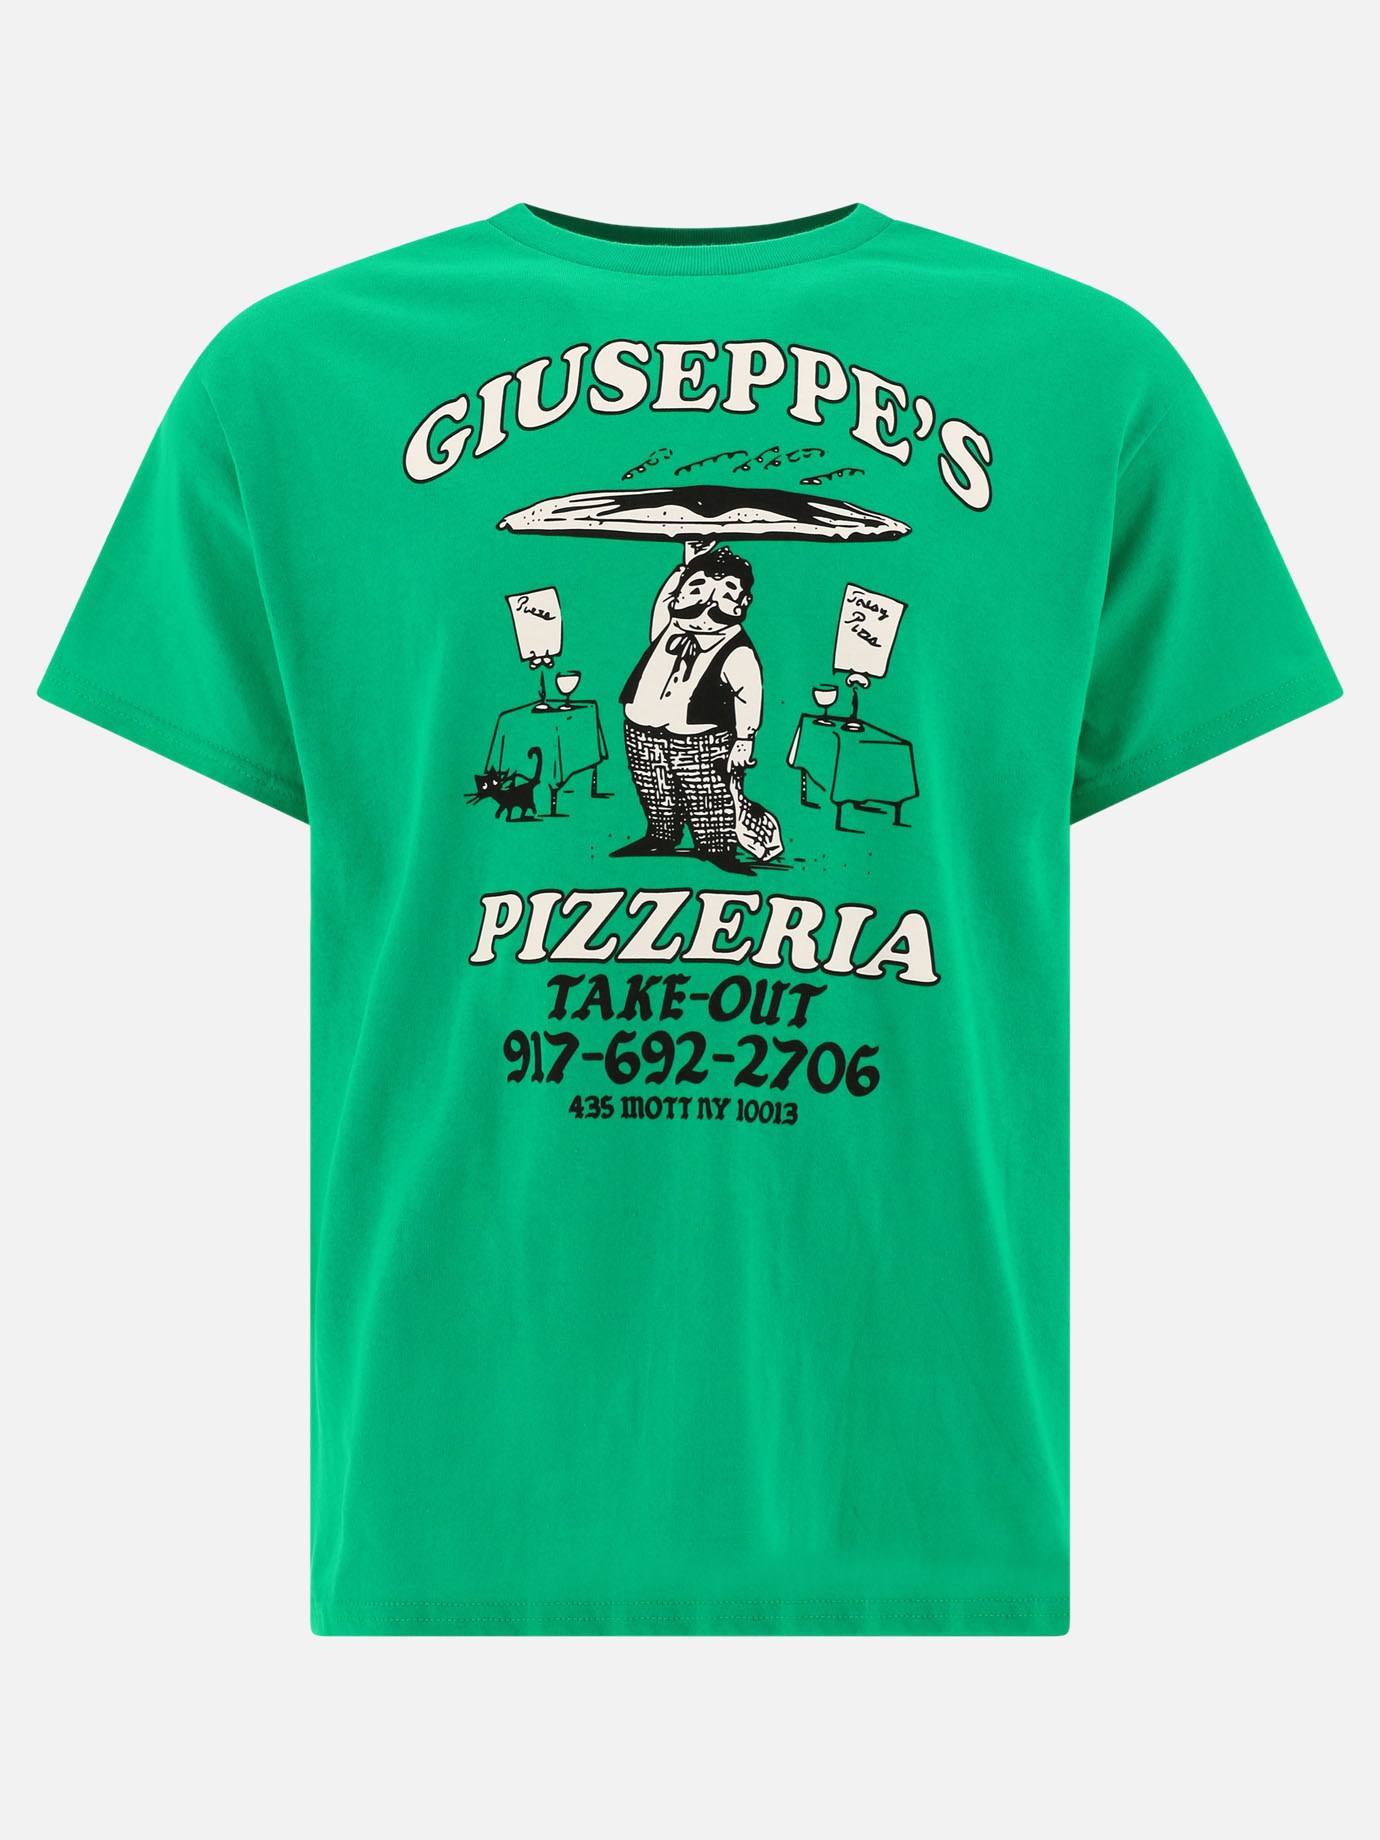  Giuseppe's  t-shirtby Call Me 917 - 4